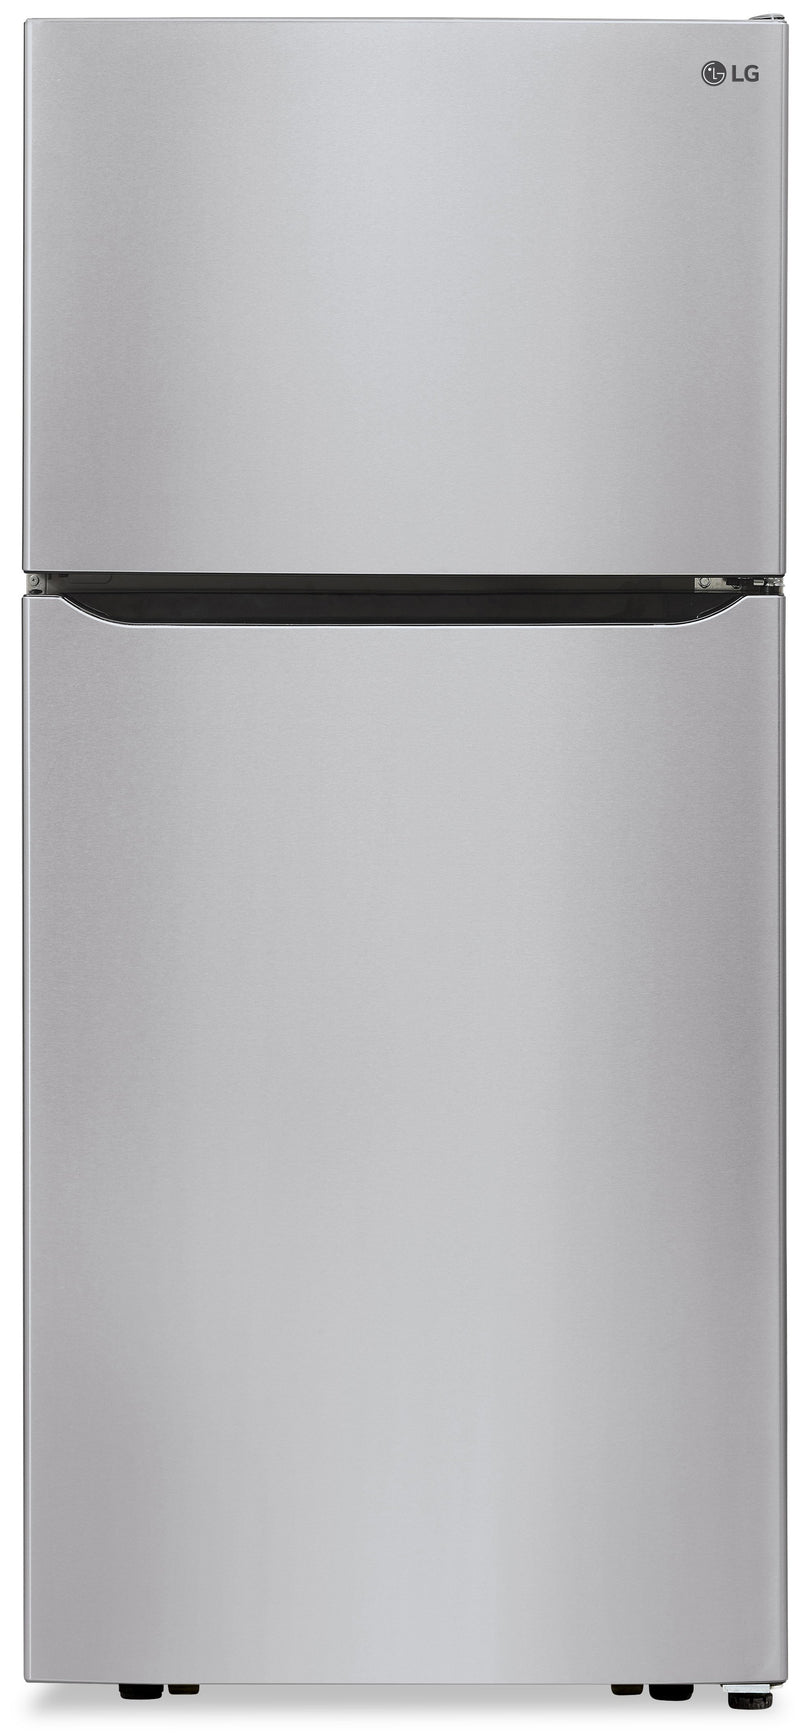 LG 20 Cu. Ft. Top-Freezer Refrigerator - LTCS20020S - Refrigerator in Stainless Steel